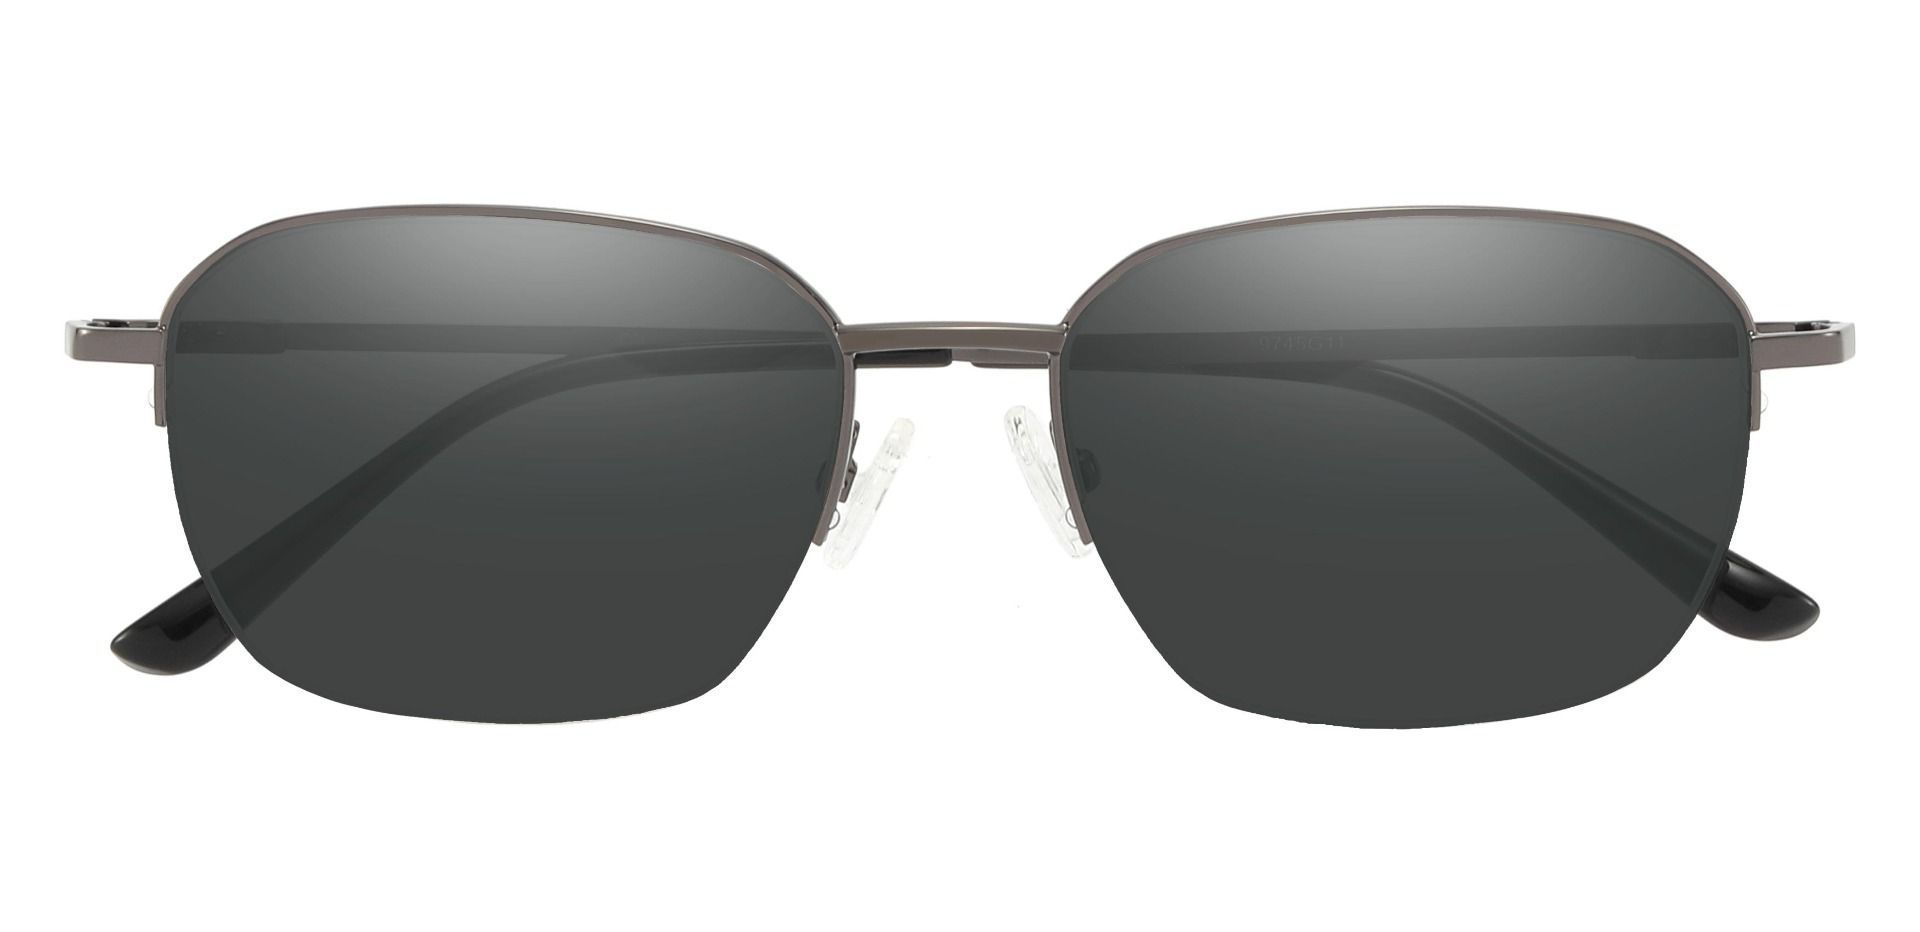 Wilton Geometric Reading Sunglasses - Gray Frame With Gray Lenses